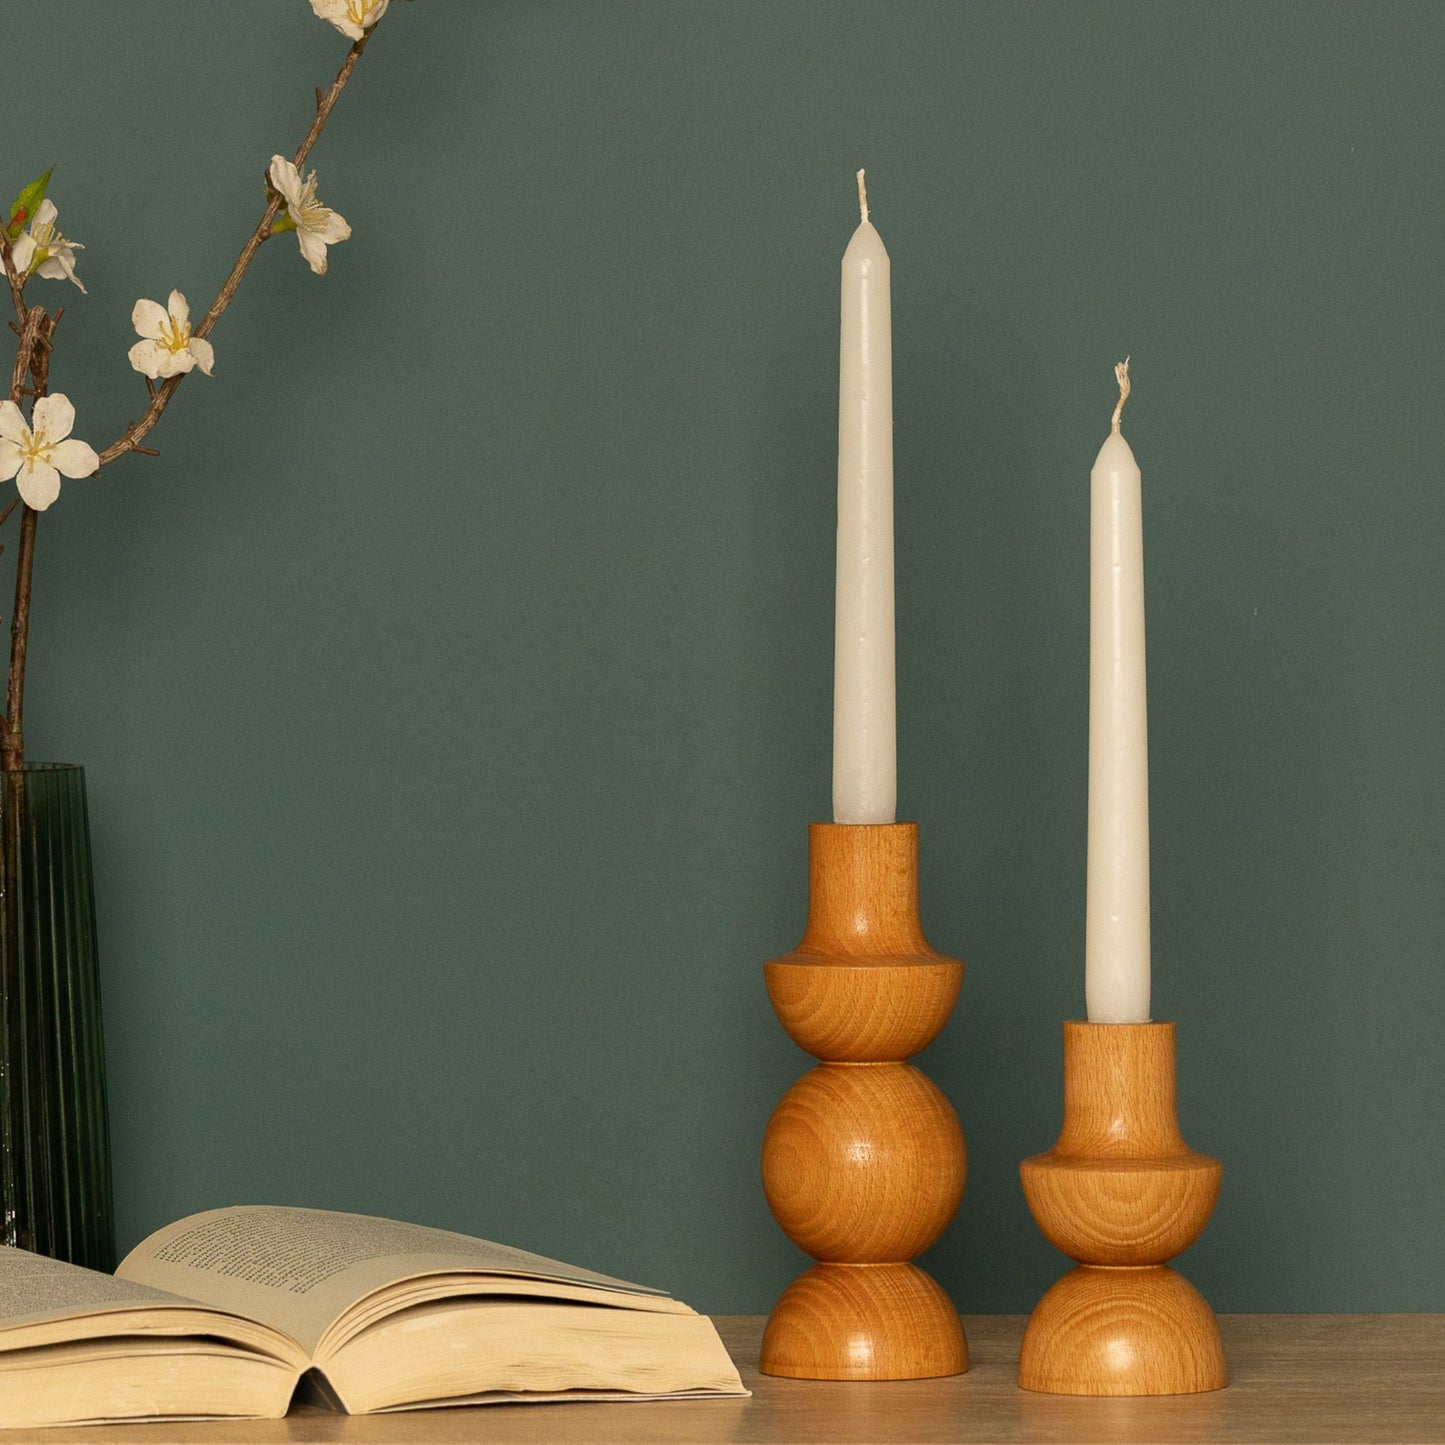 Frustum cone table lamp + Avacas candle holder set